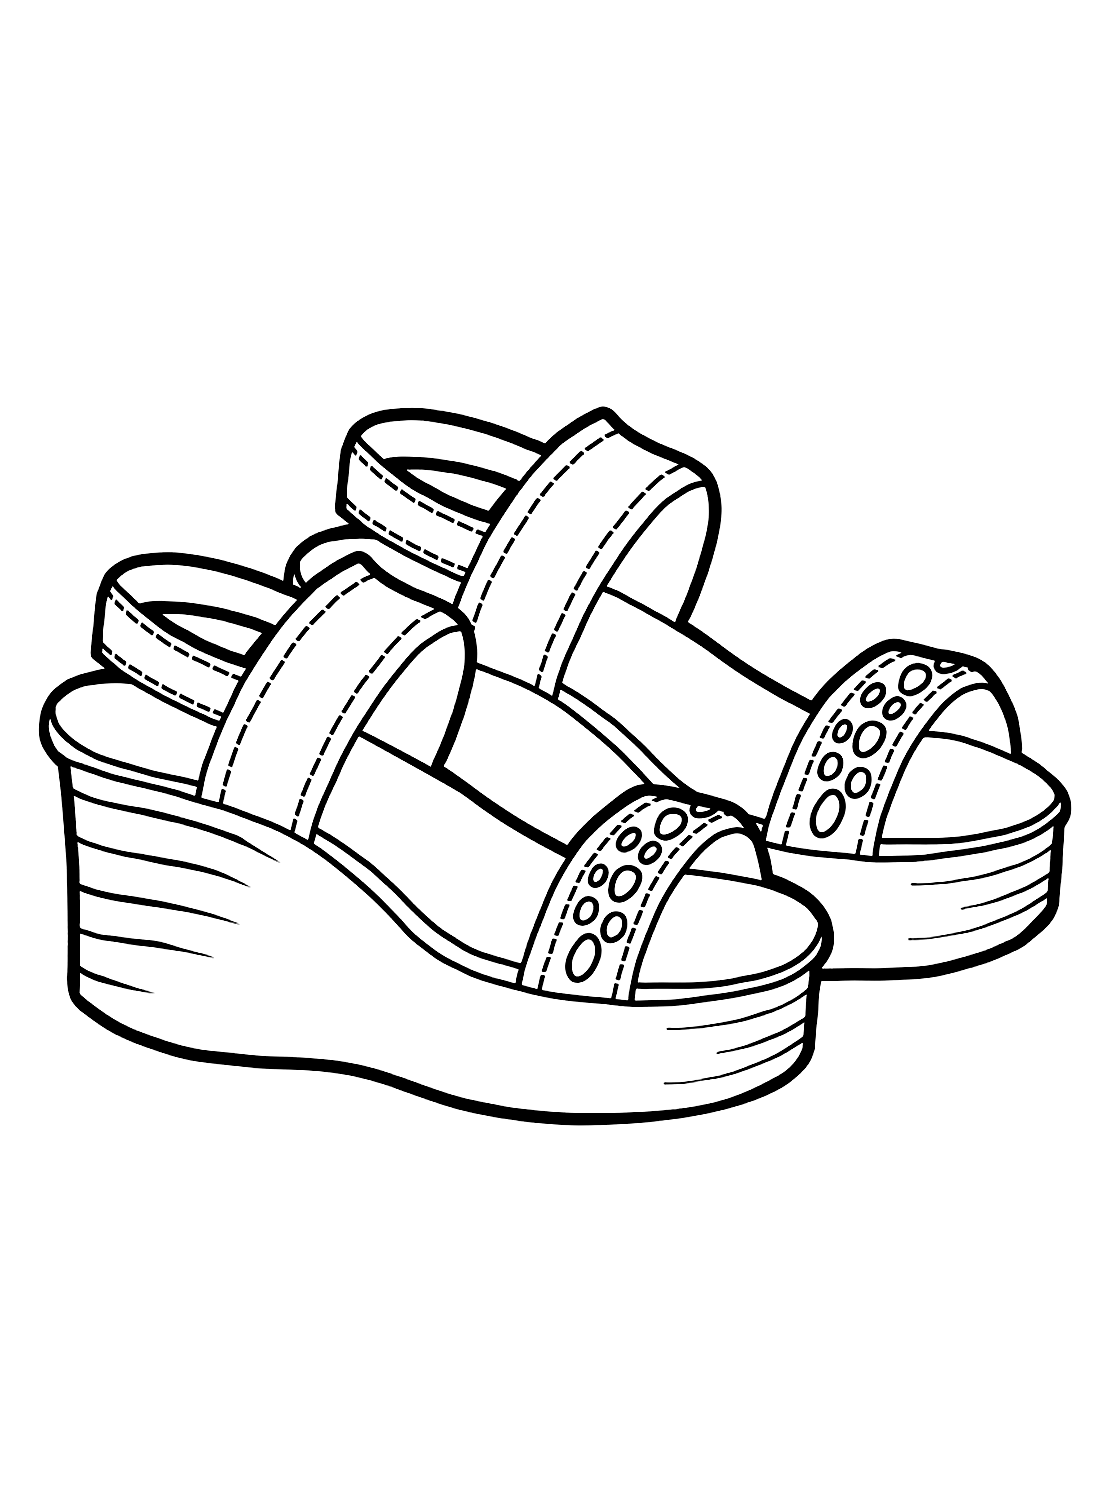 Imagem para colorir de sapato feminino de sapato